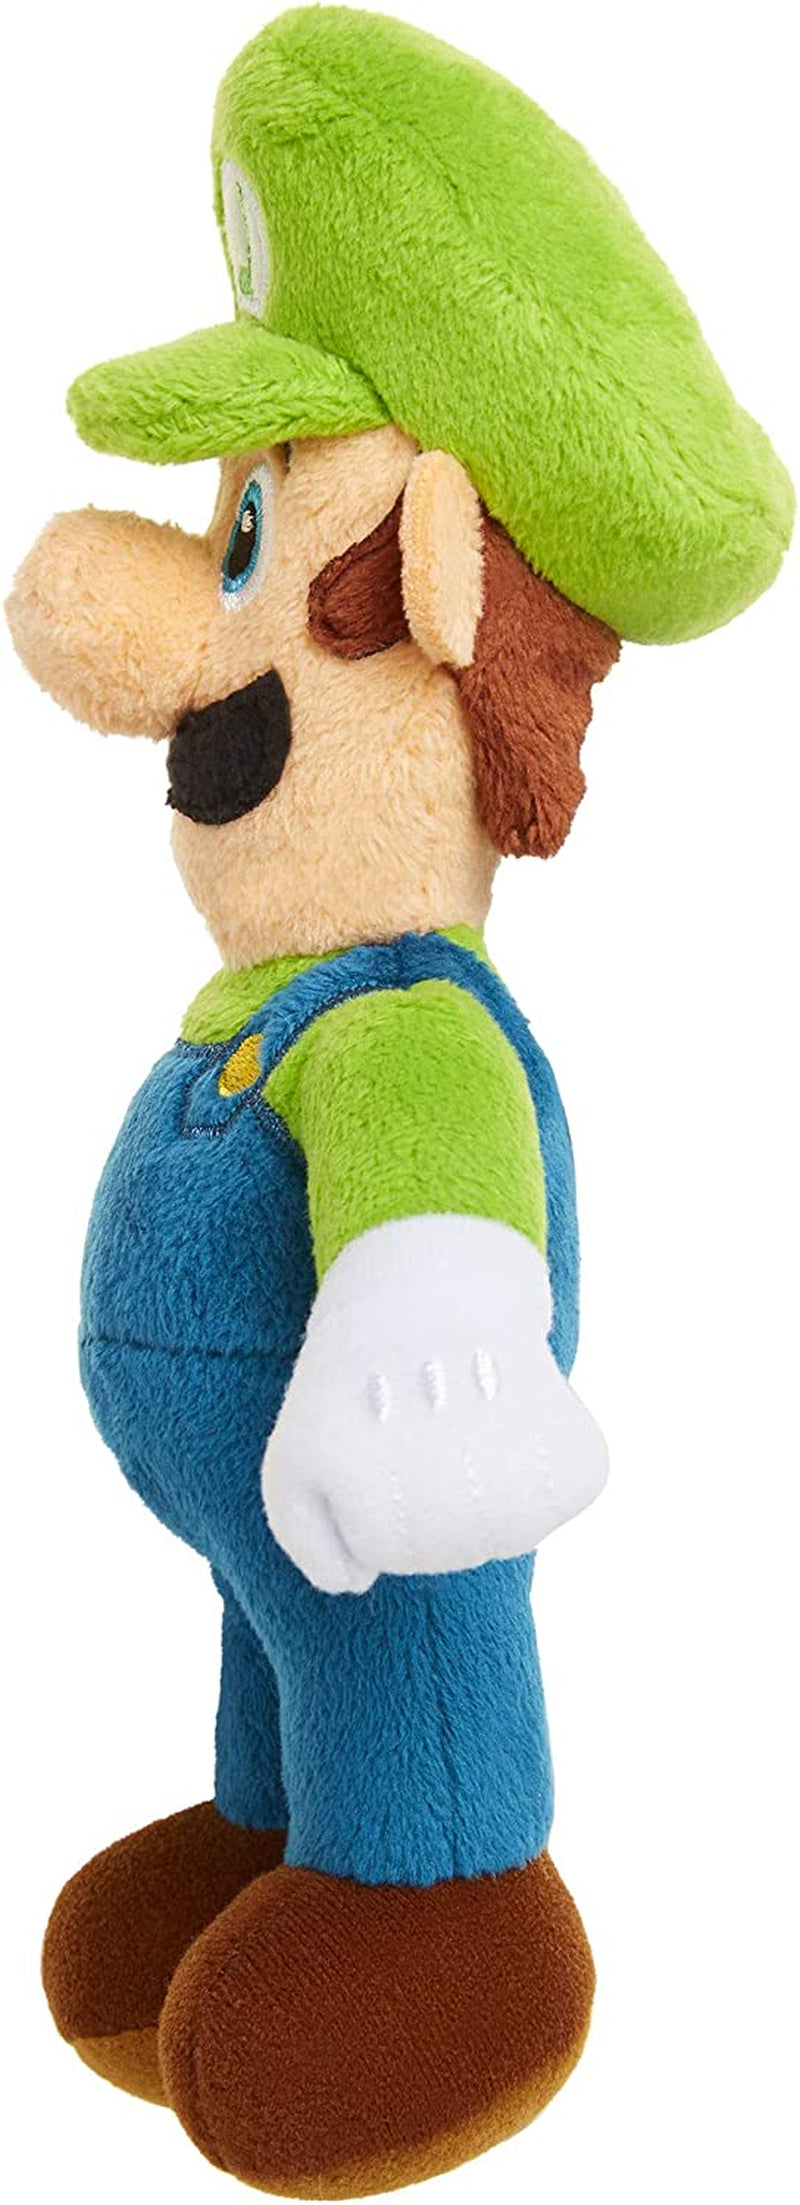 SUPER MARIO Luigi Plush Stuffed Toy Figure 6" Scale